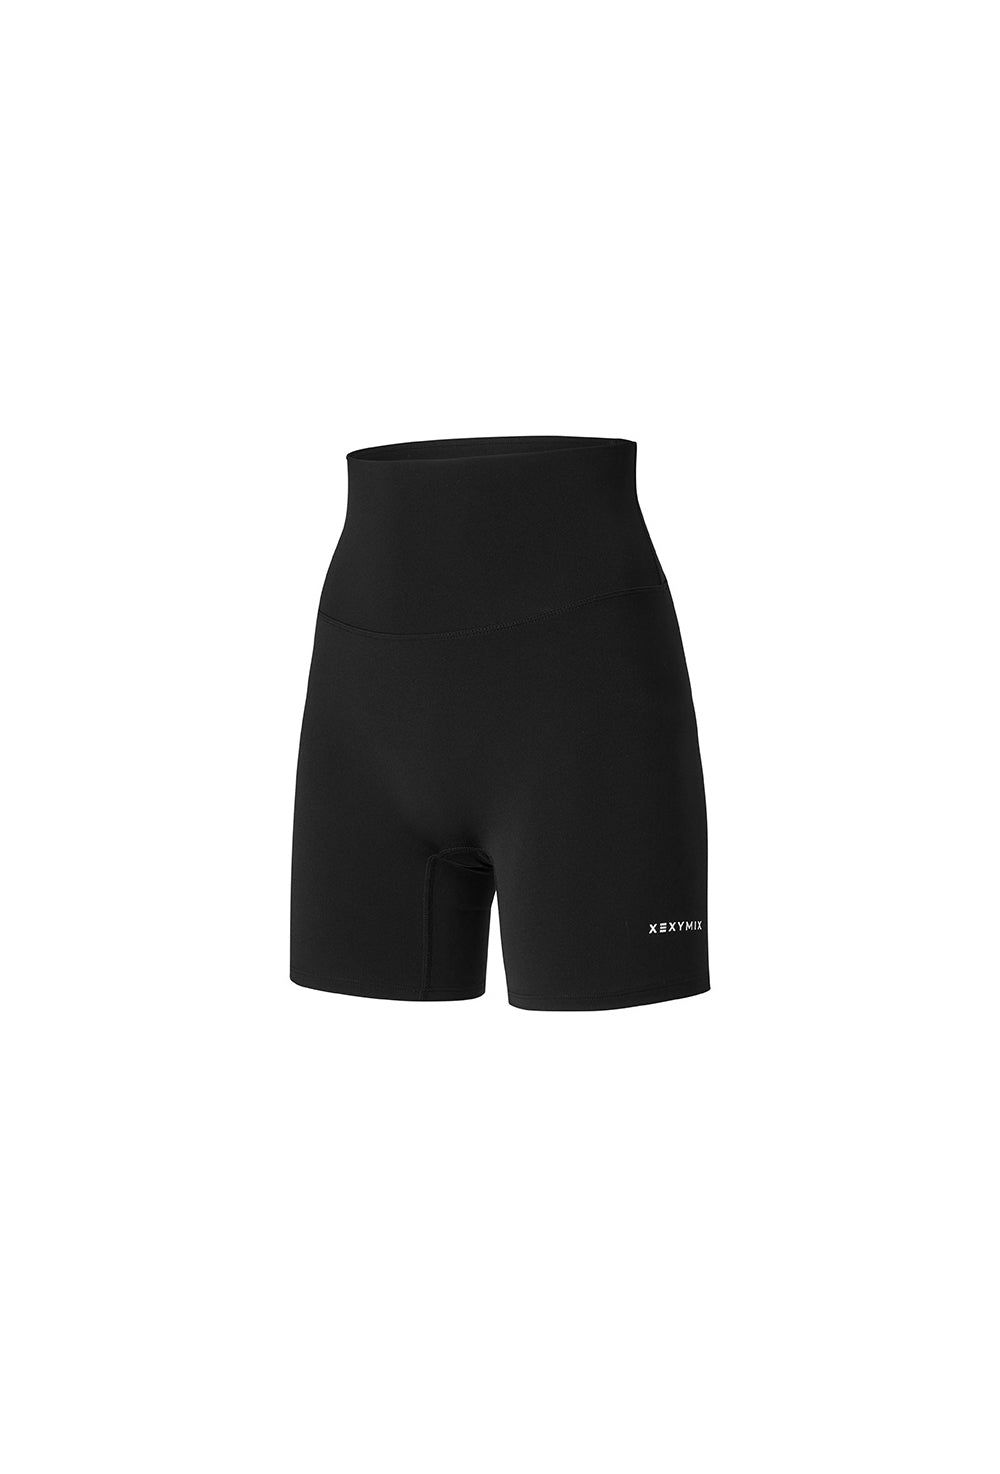 Black Label 360N Leggings 3.5 Shorts - Black